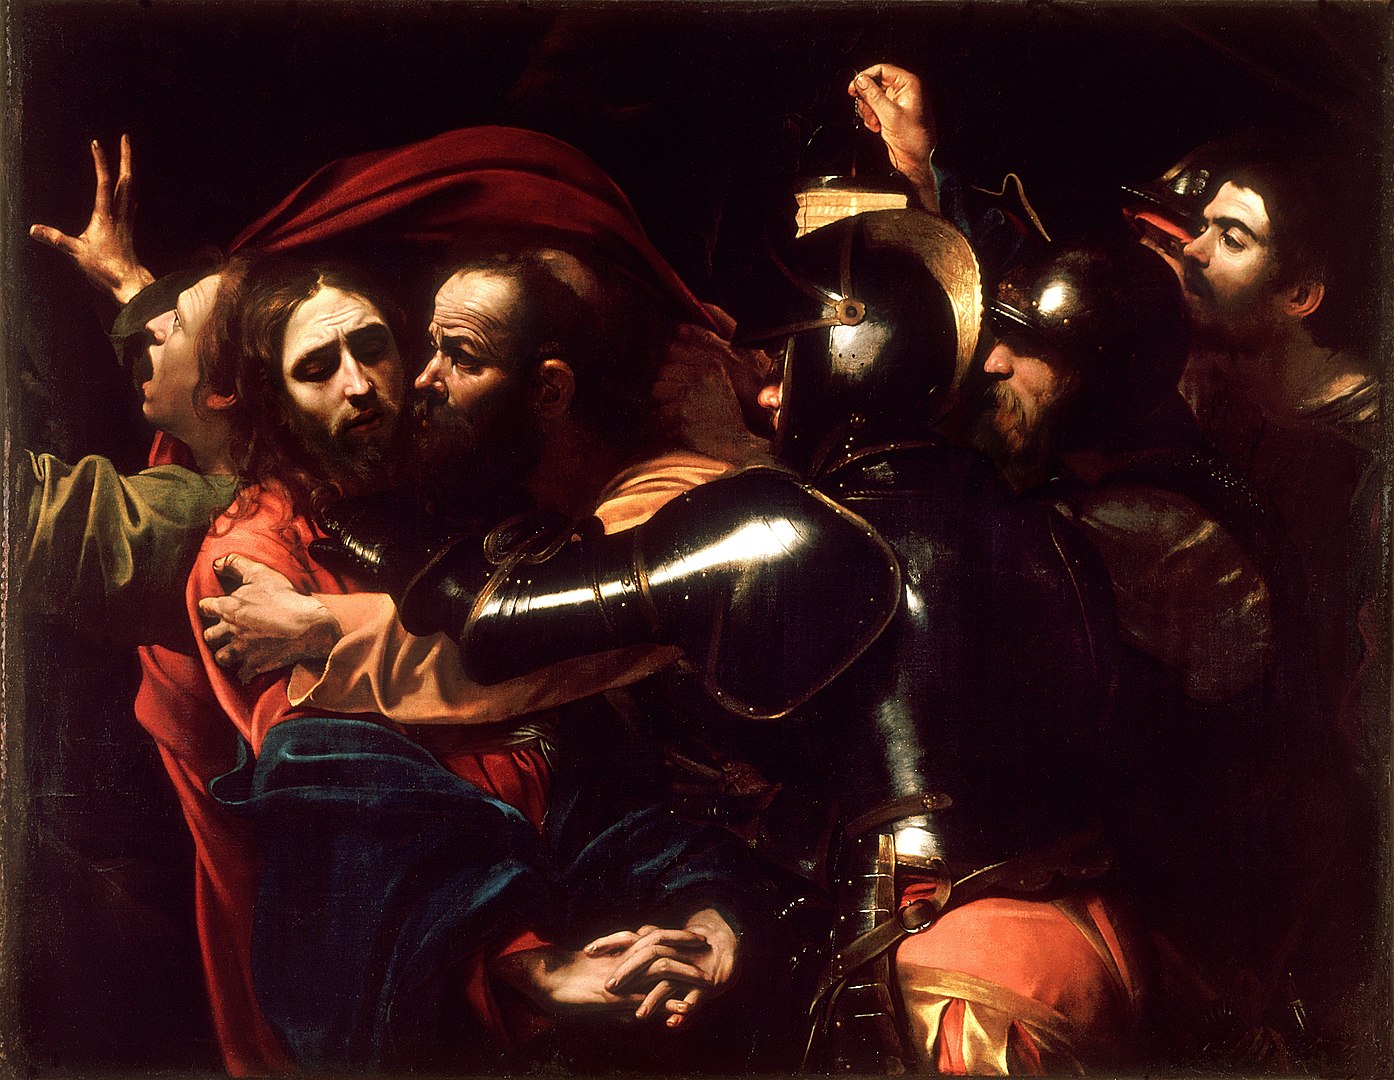 The Passion of the Christ: An Artistic Interpretation... hero image